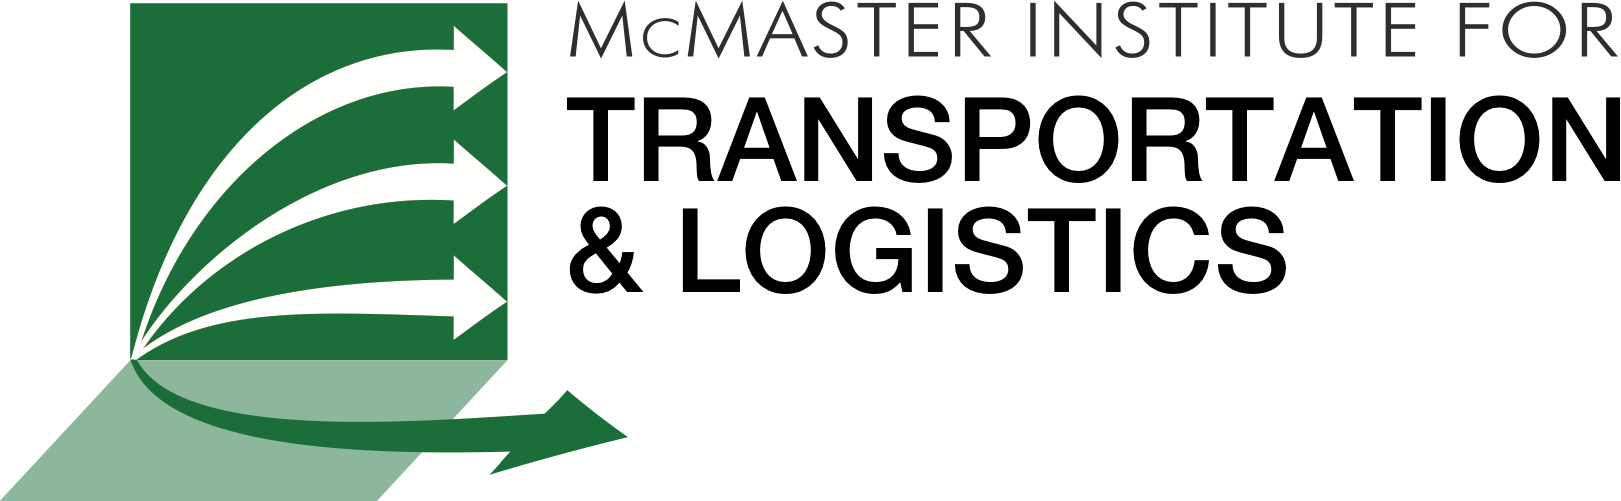 McMaster University Institute for Transportation Logistics (MITL) logo